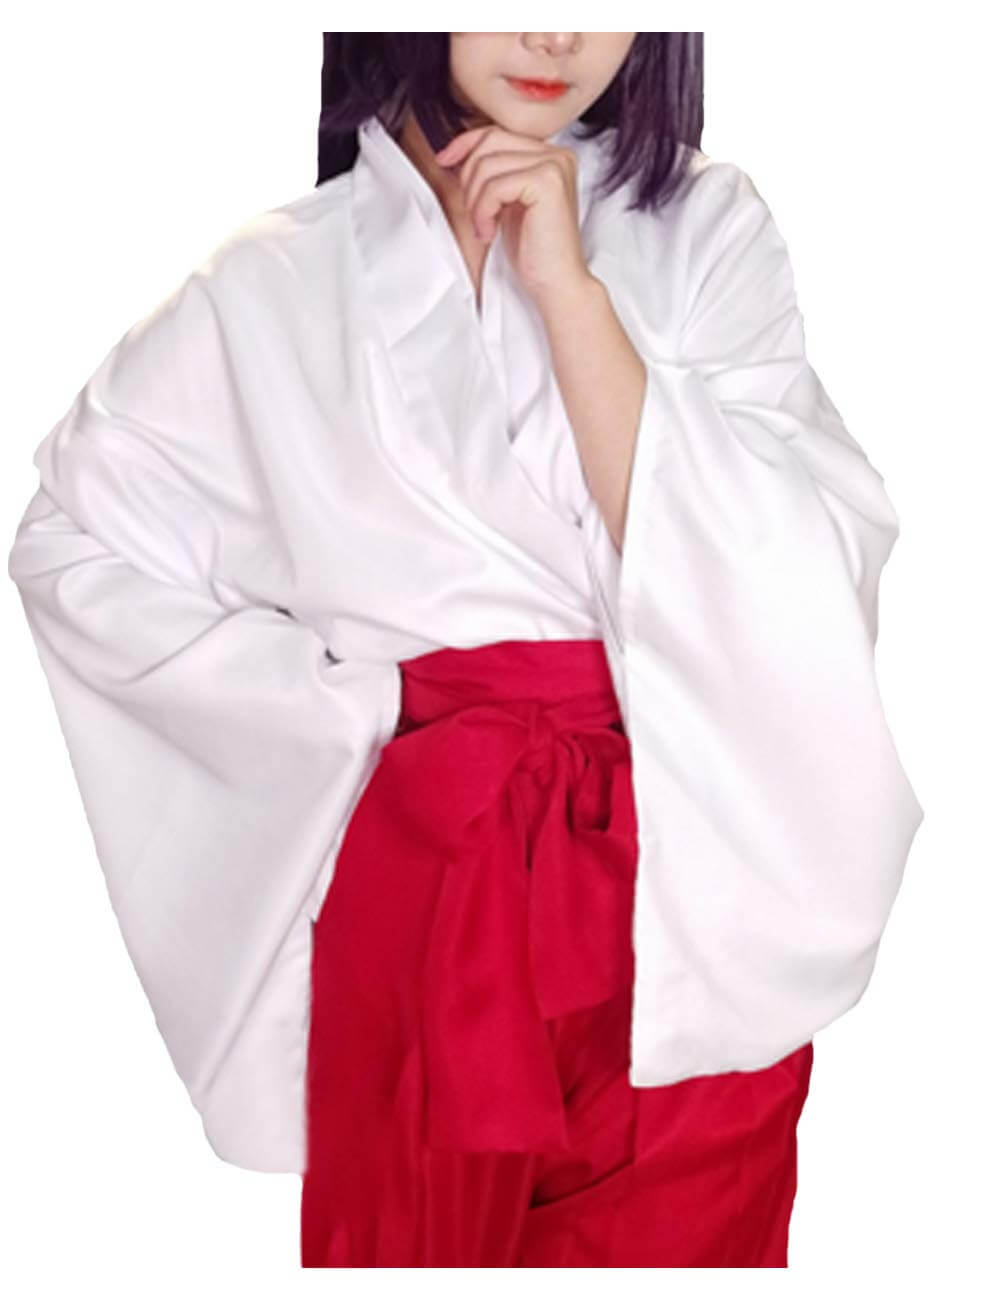 Teens/Adult Utahime Lori Costume White Red Kimono Dress Full Set for Women Girl Cosplay